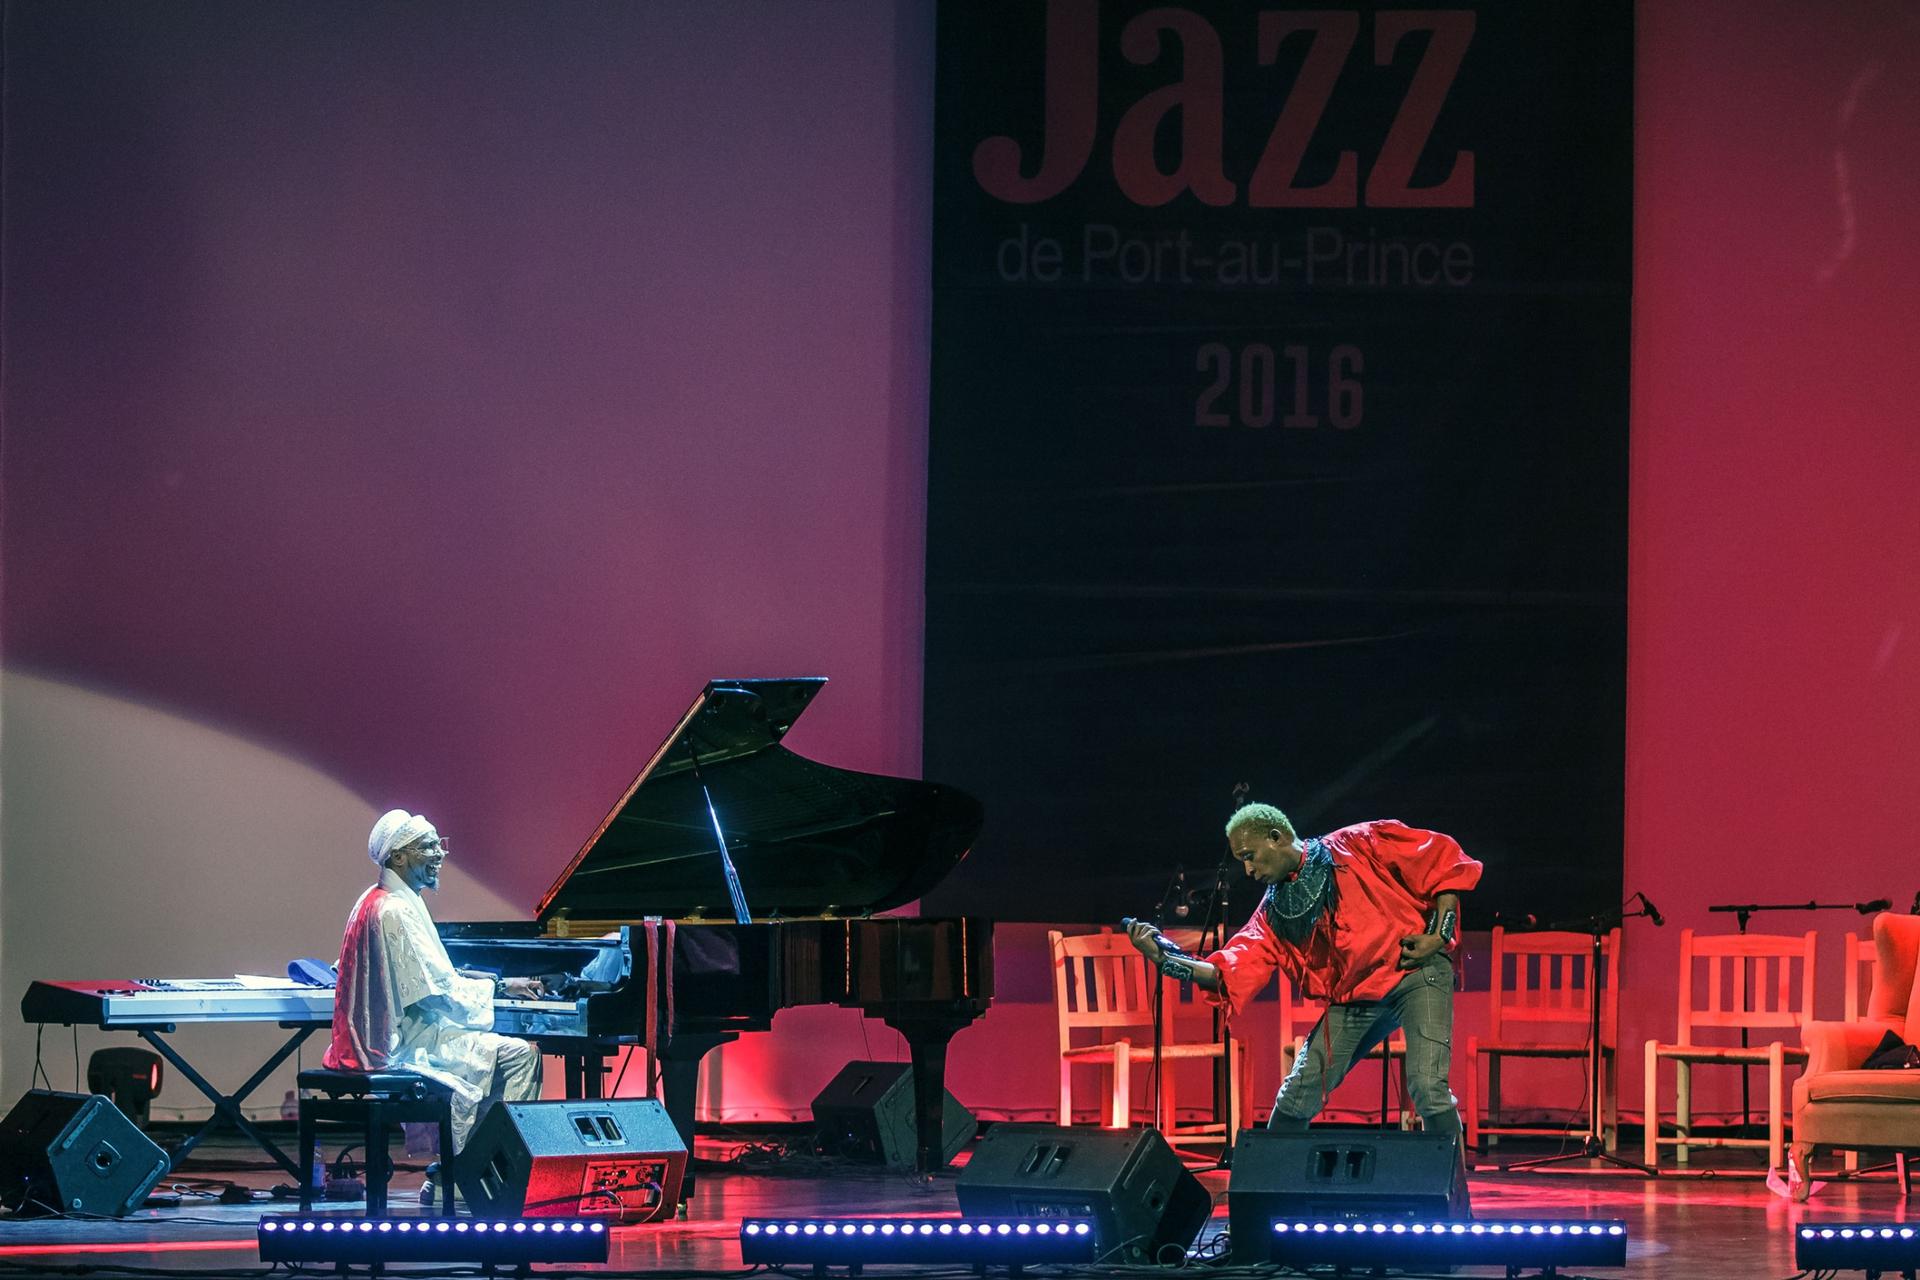 Haitian vodou priest, dancer and singer Erol Josué and Cubain pianist Omar Sosa perform at Haiti's PapJazz Festival.